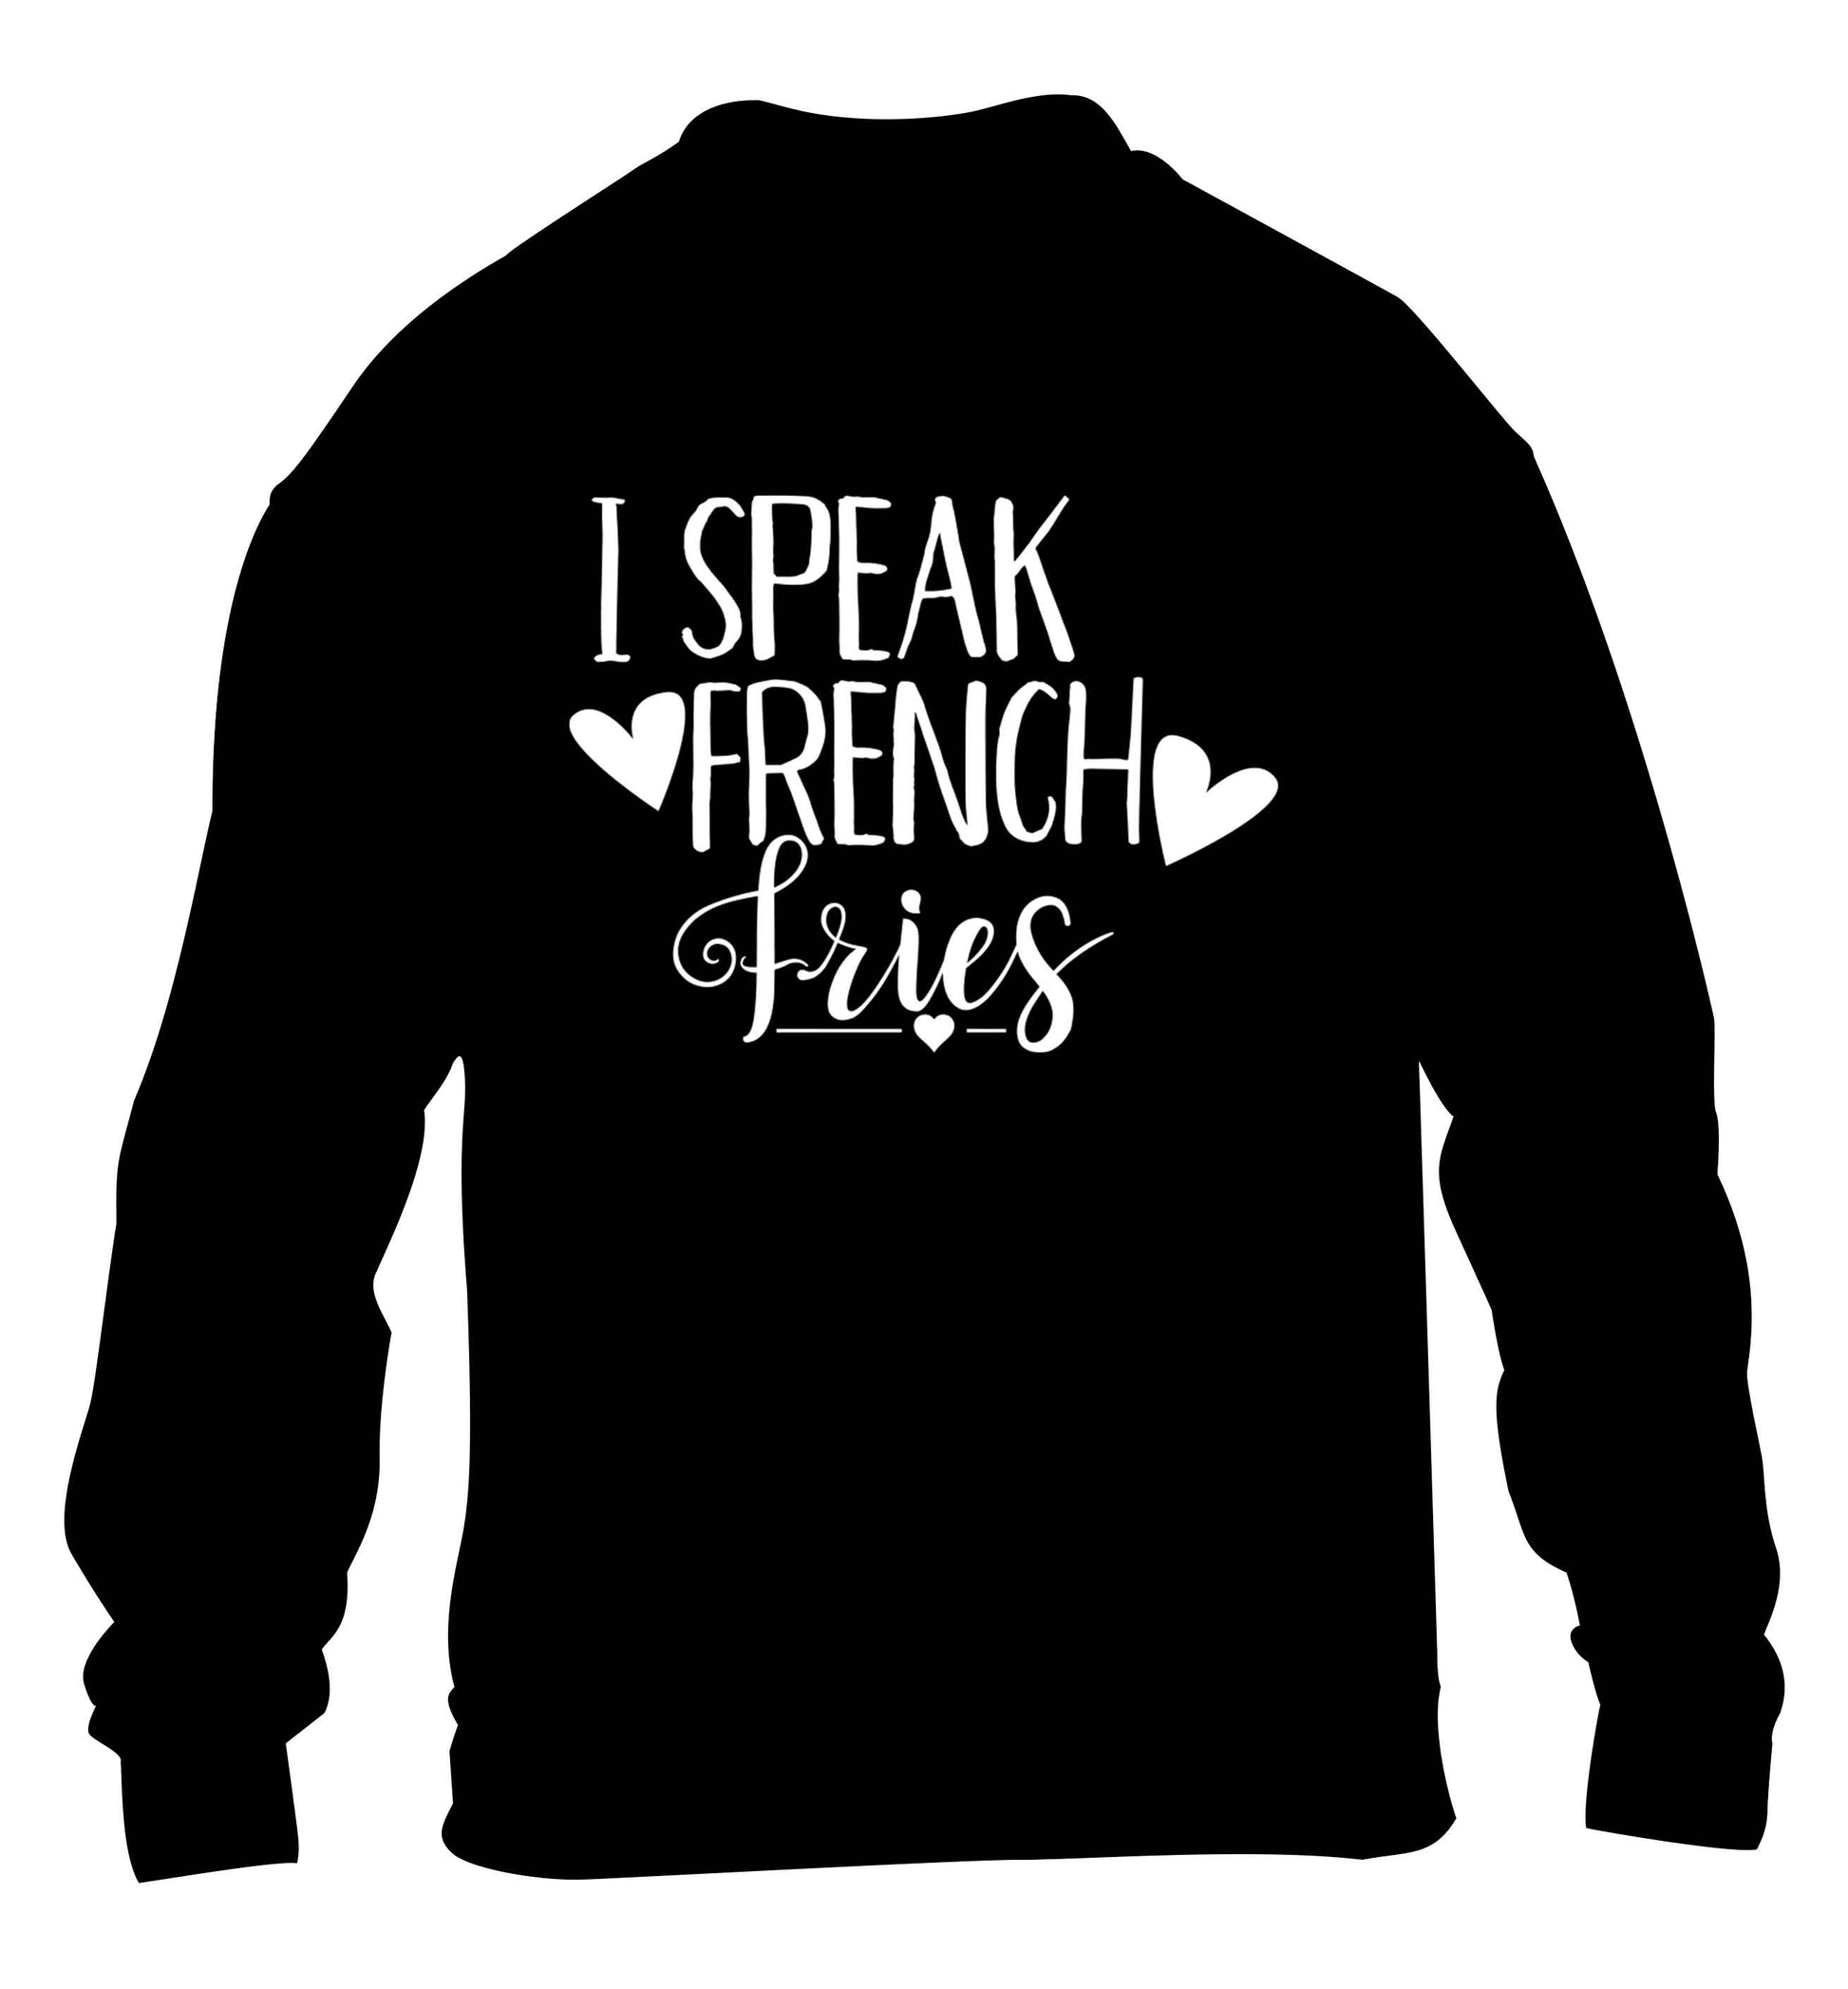 I speak French fries children's black sweater 12-13 Years